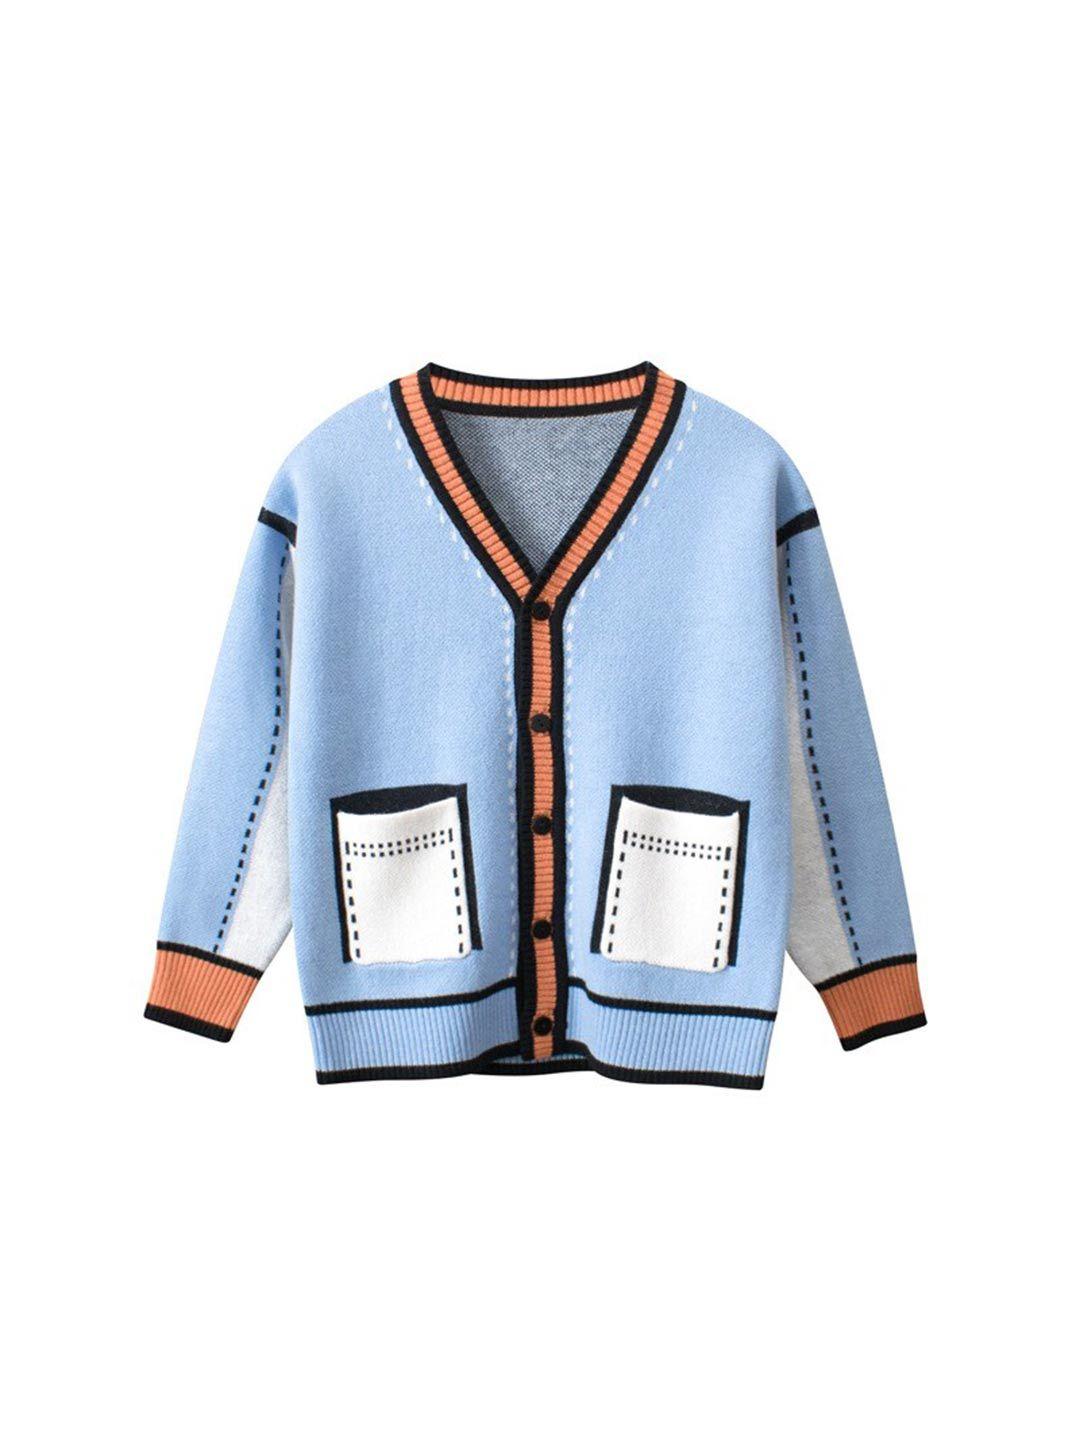 StyleCast Boys Blue & White V-Neck Cardigan Sweater